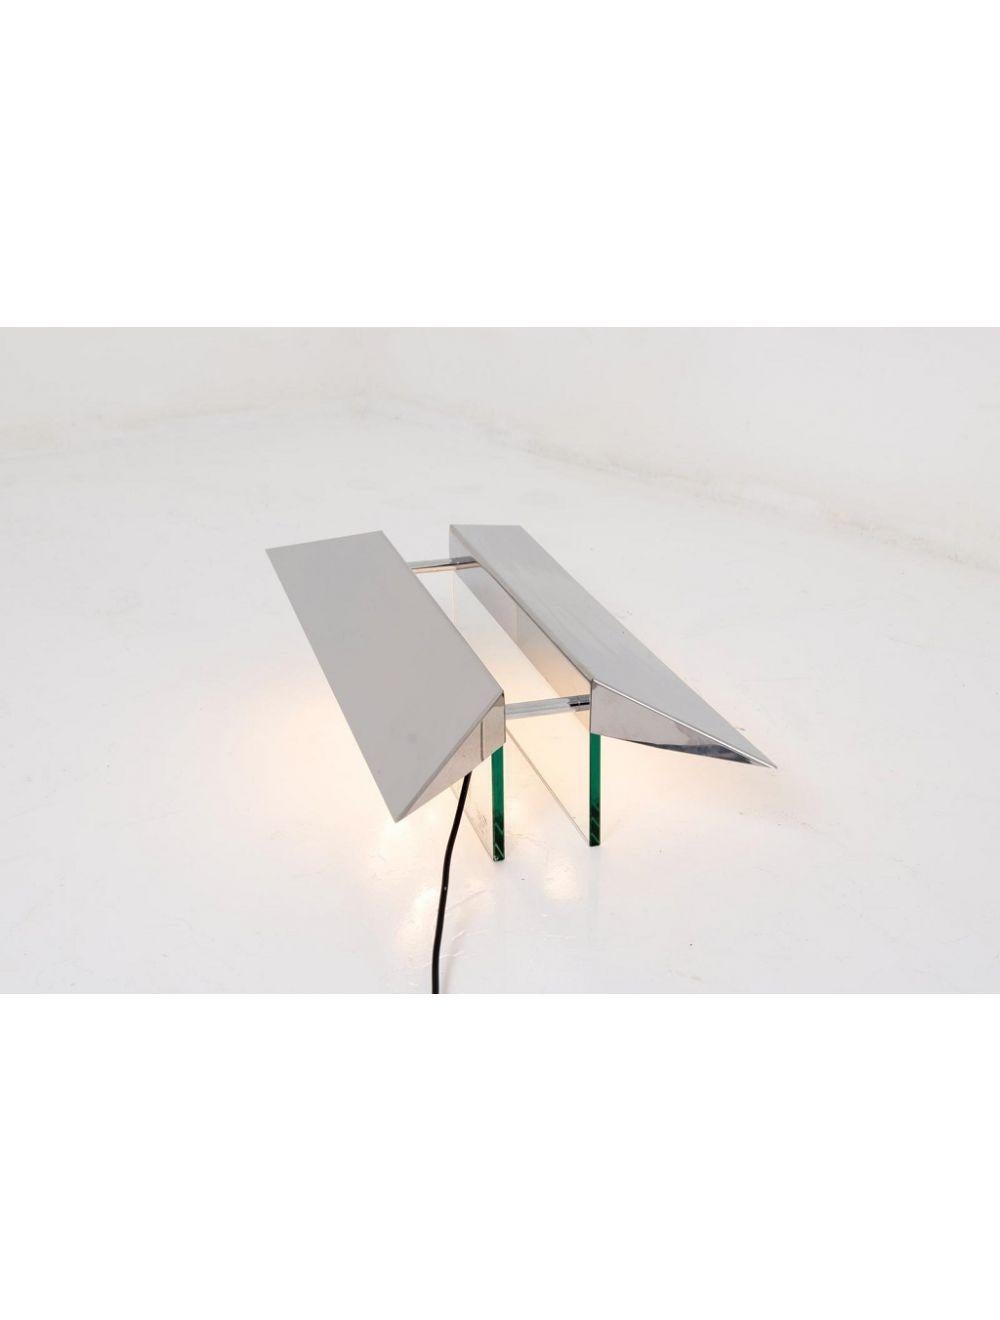 Italian Pietra Table Lamp by Gae Aulenti for Fontana Arte, 1988